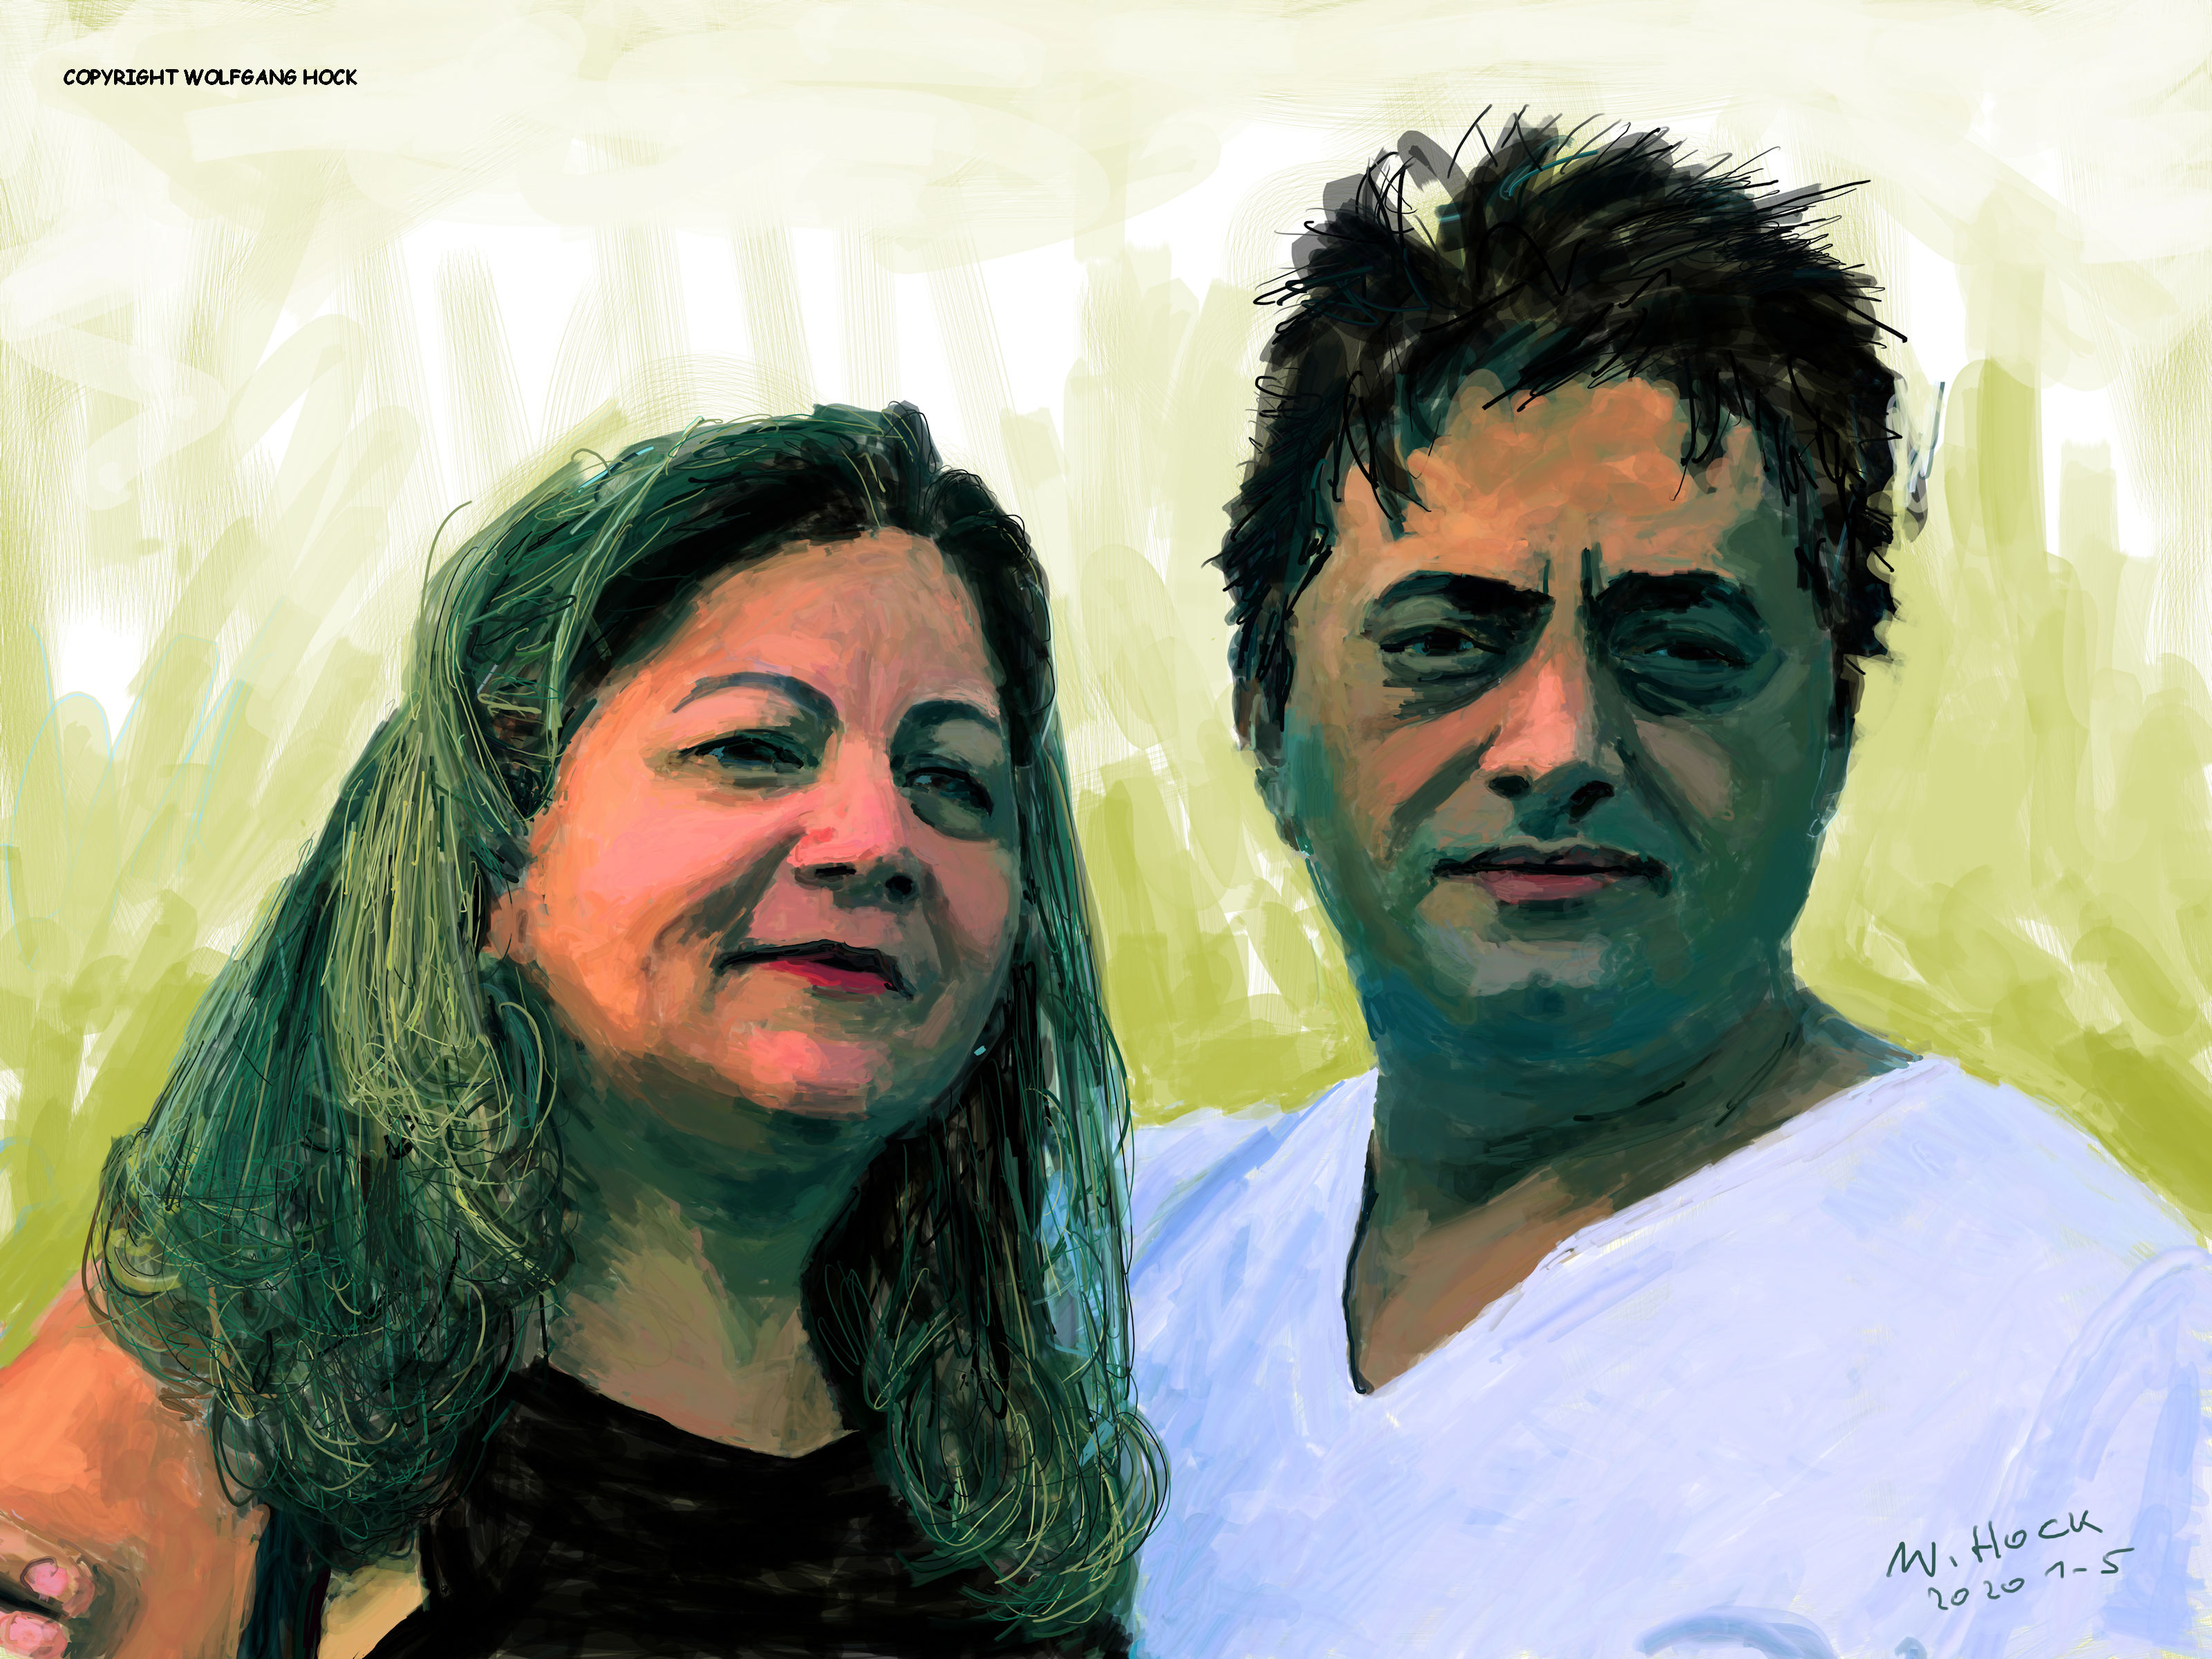 Ehepaar II - Couple II - Casal II 2020   Handmade digital painting on canvas 160 x 120 cm (201 megapixels)